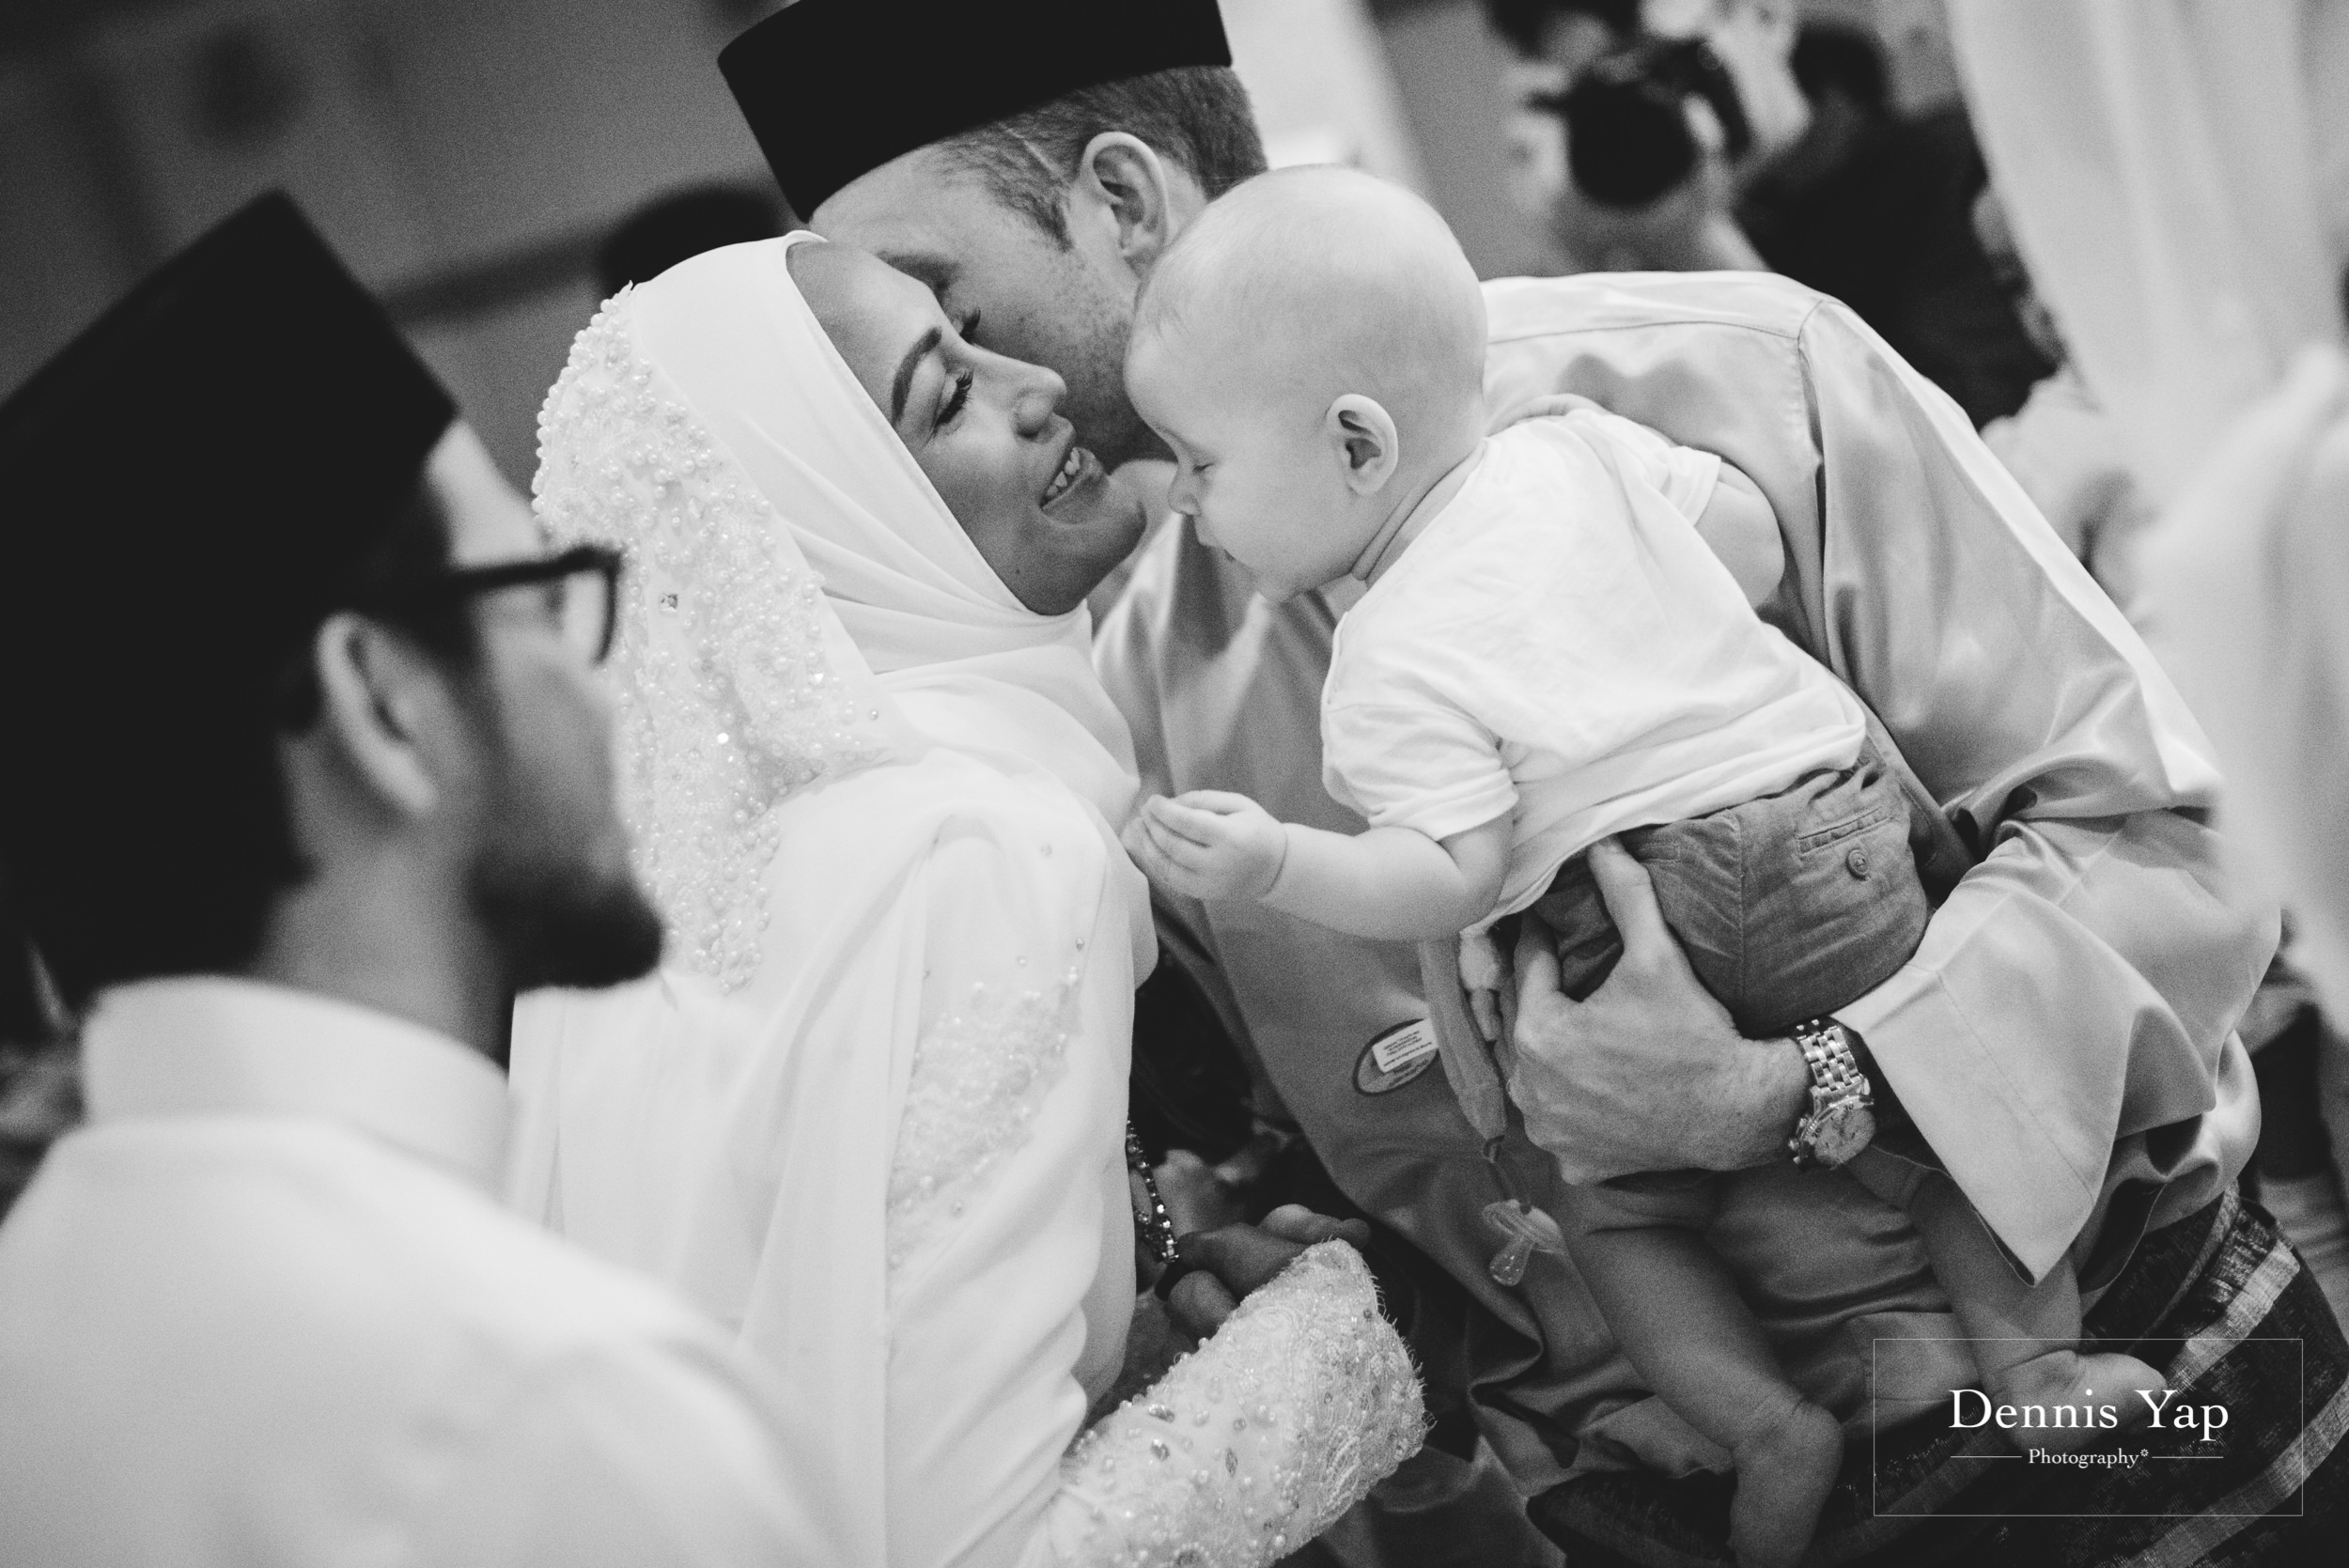 zarif hanalili malay wedding ceremony dennis yap photography-21.jpg